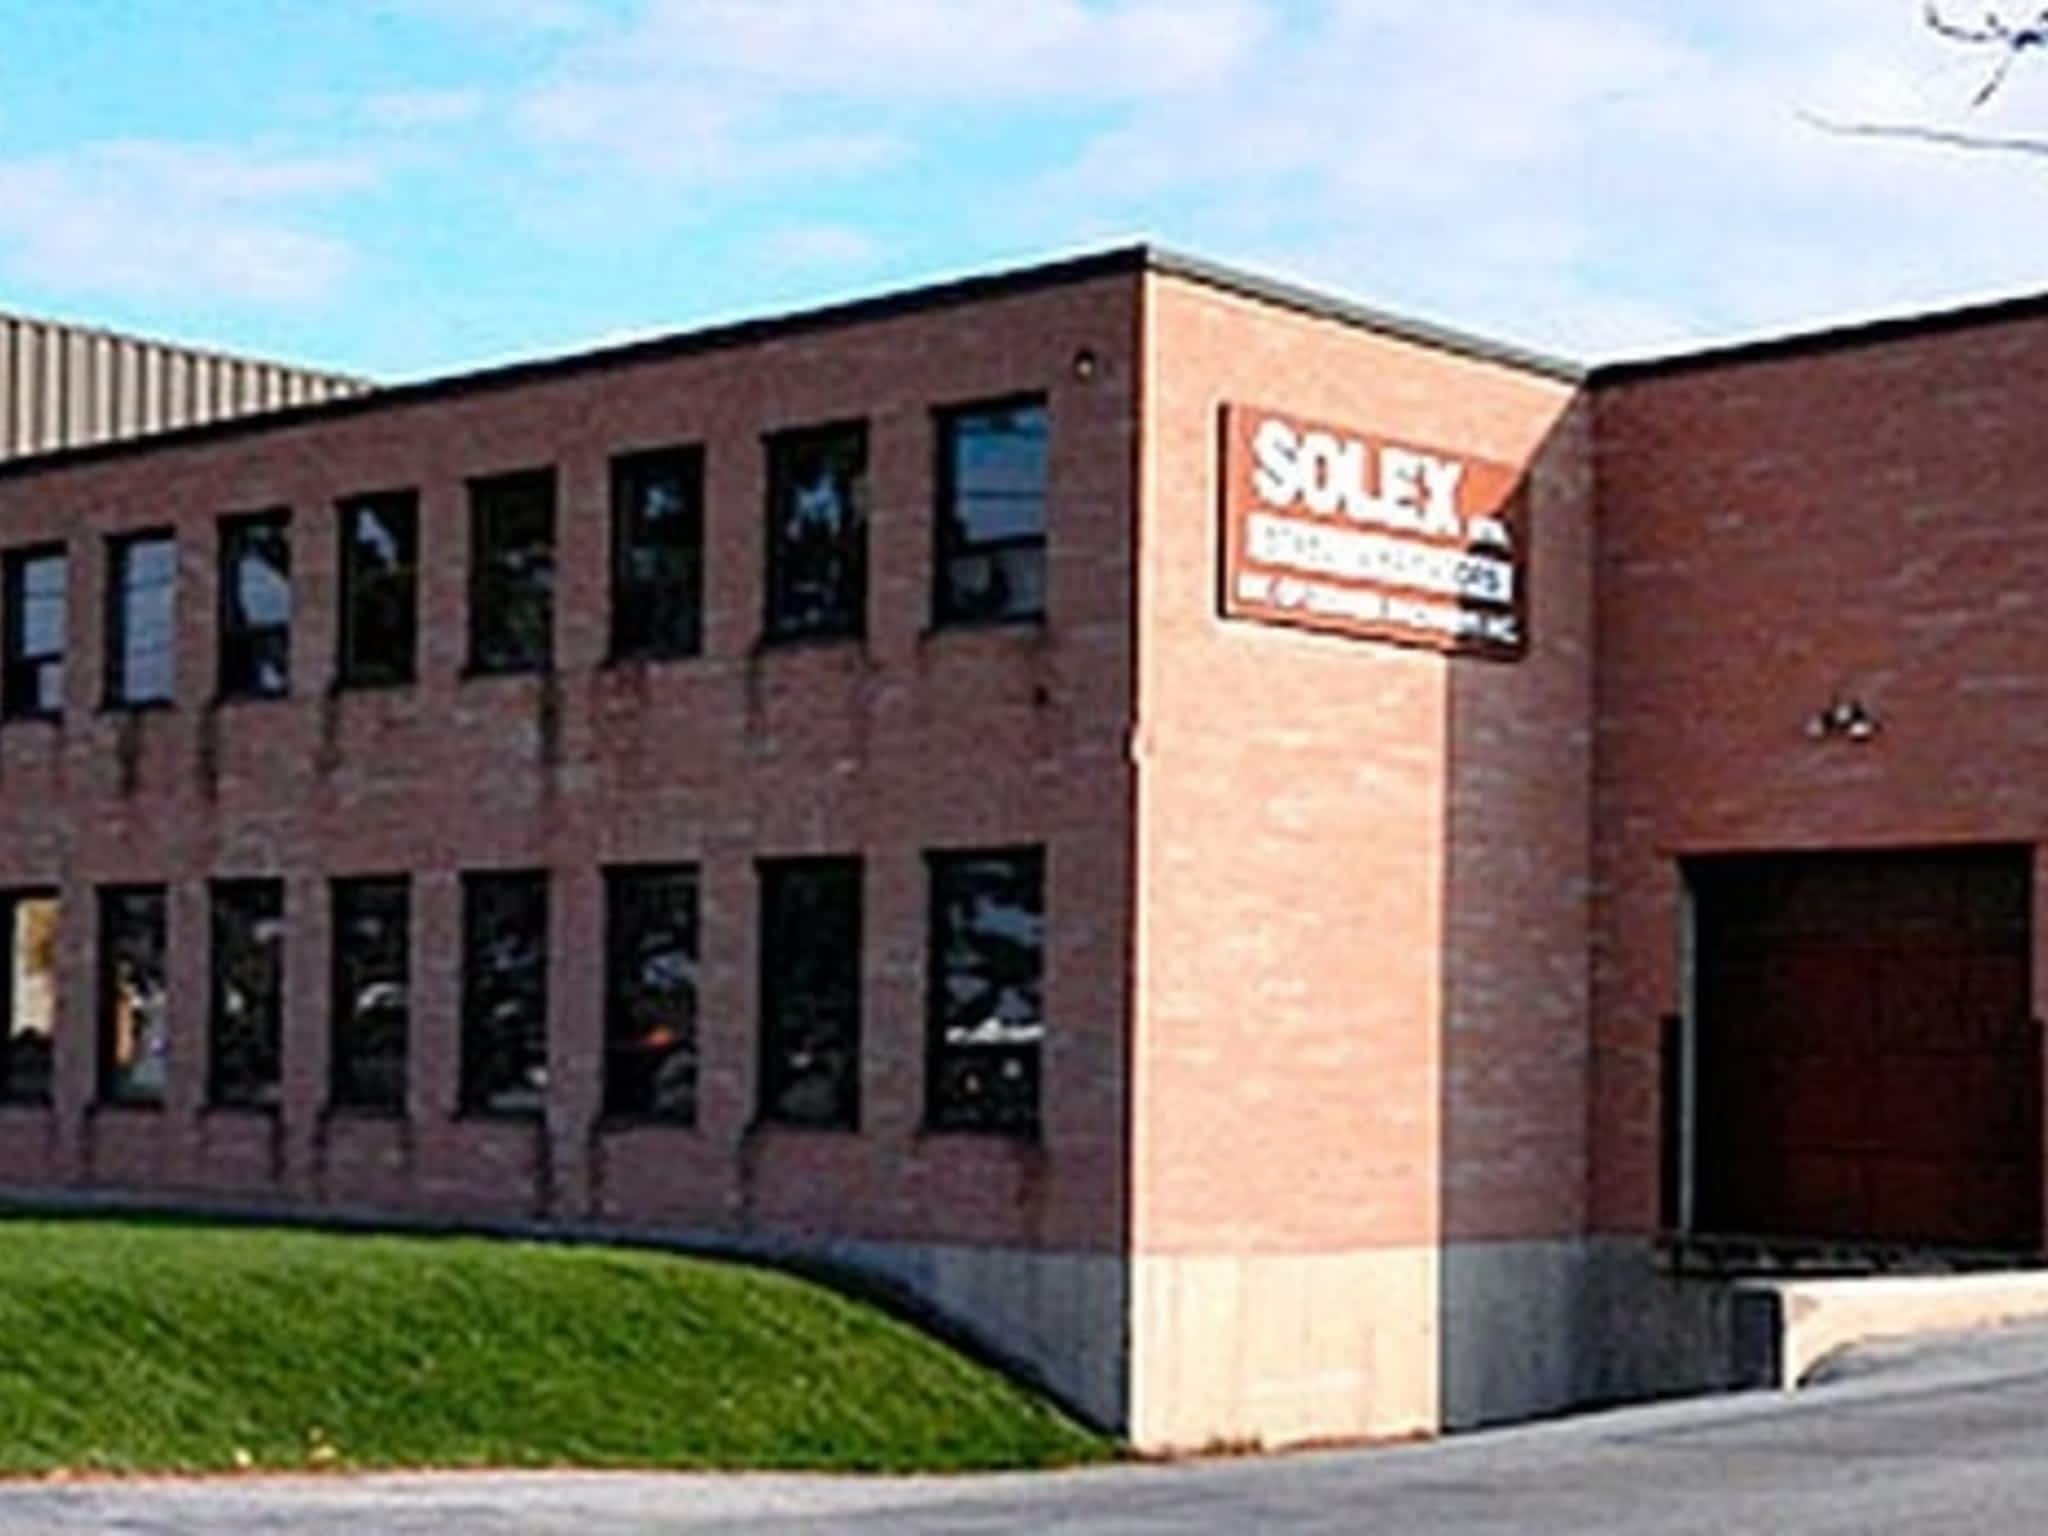 photo Solex Indstrl Handling Equipment Ltd